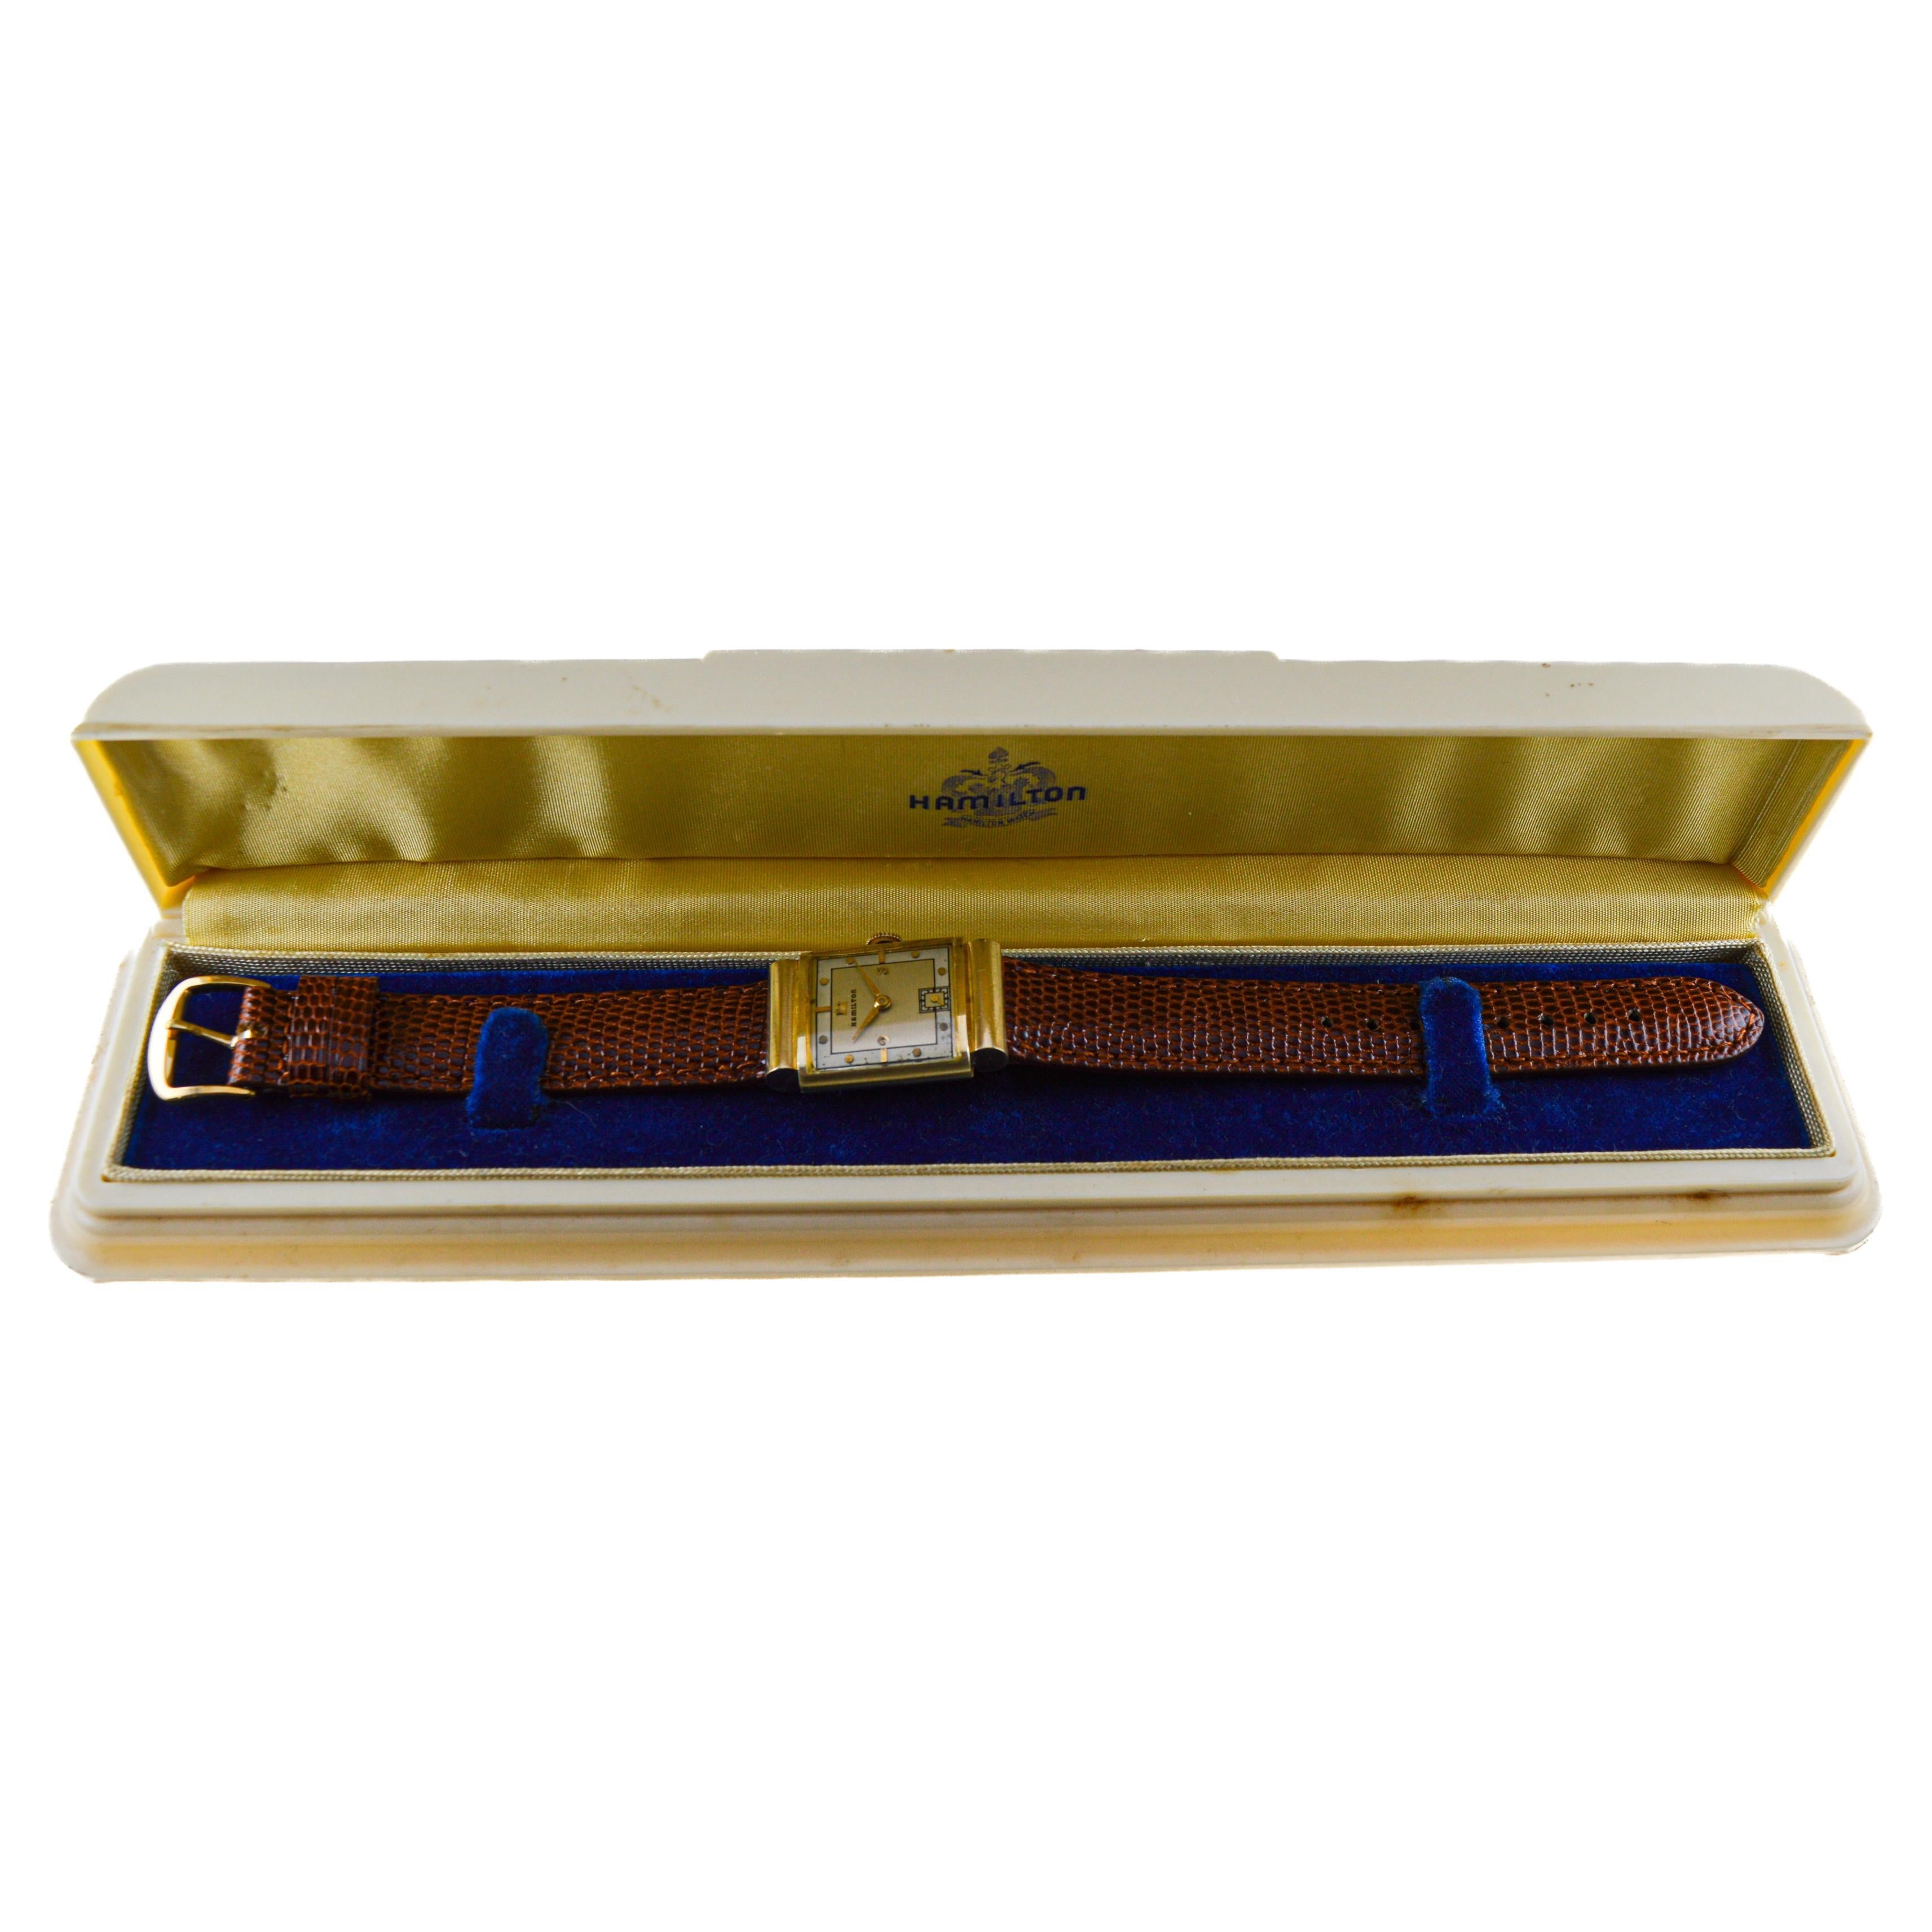 Hamilton 14Kt Gold "Midas" Art Deco Watch 1940's with Original Dial Strap & Box For Sale